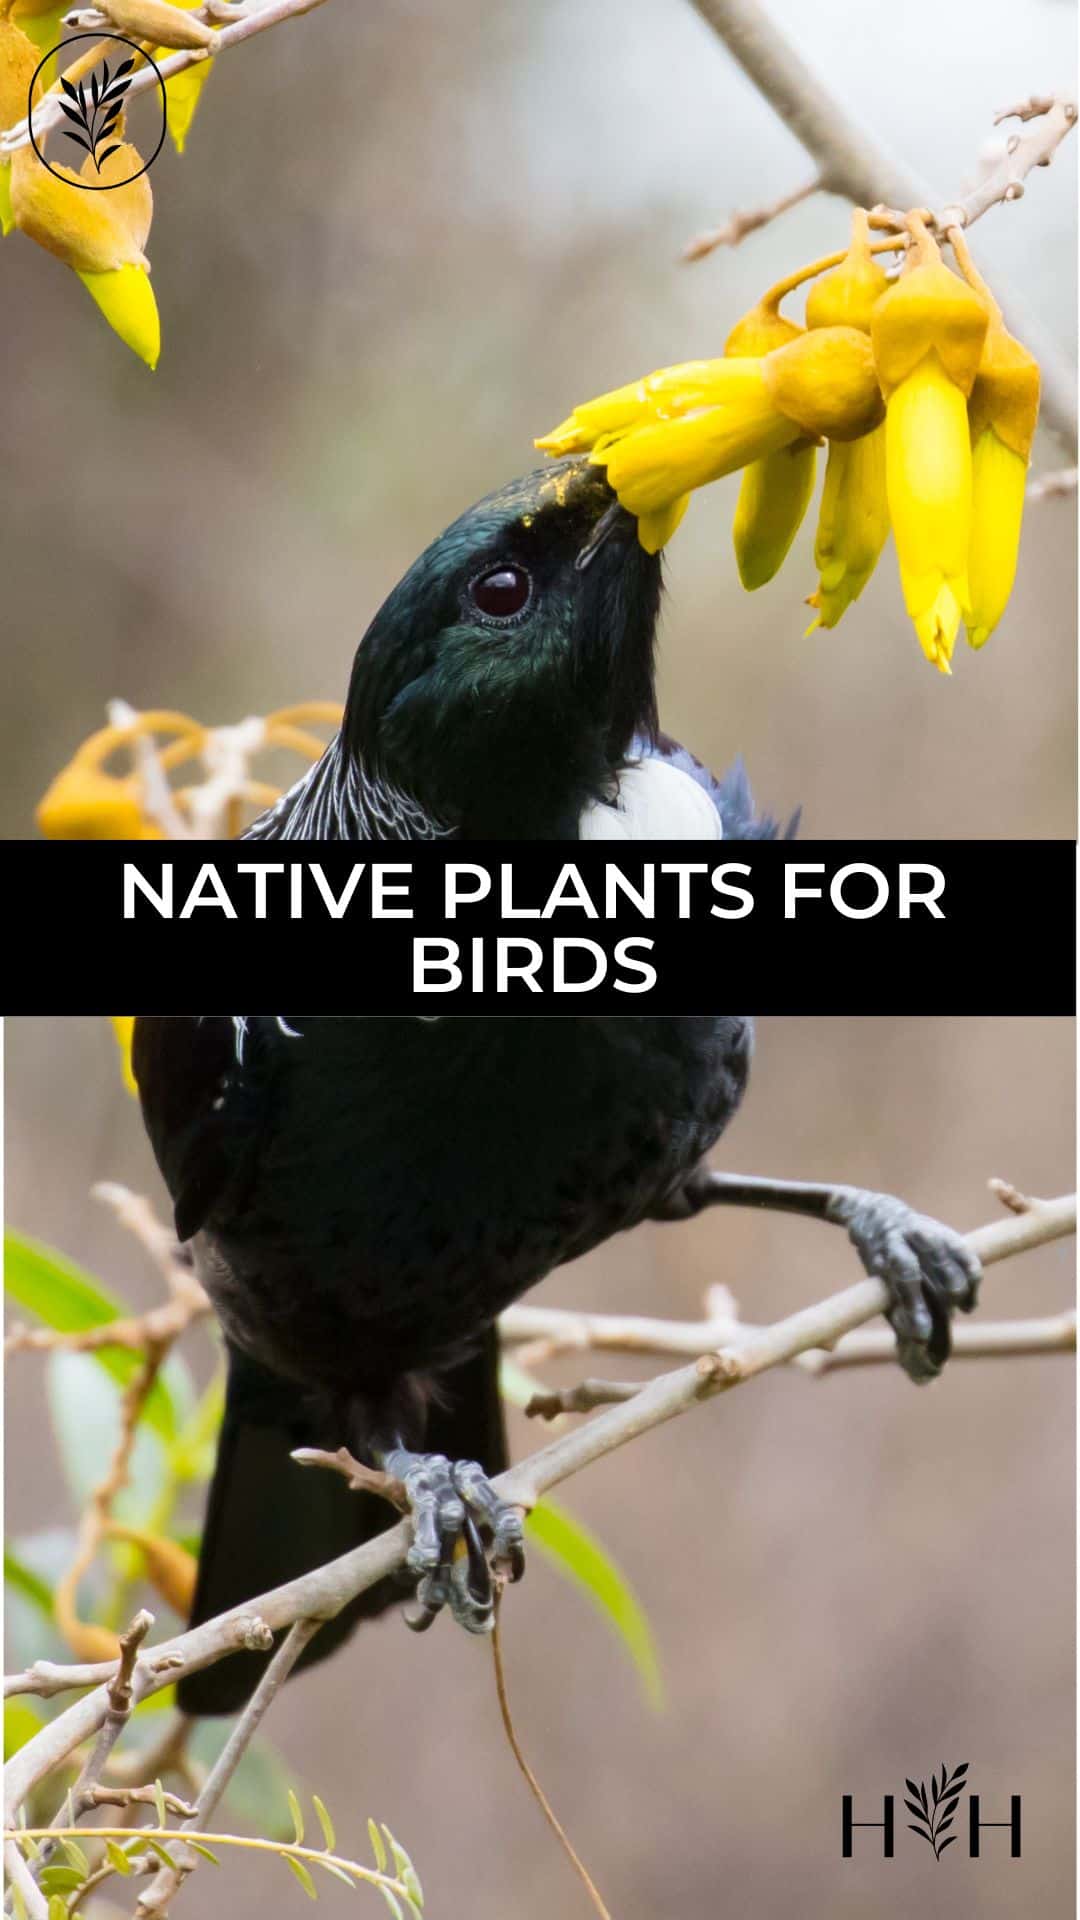 Native plants for birds via @home4theharvest